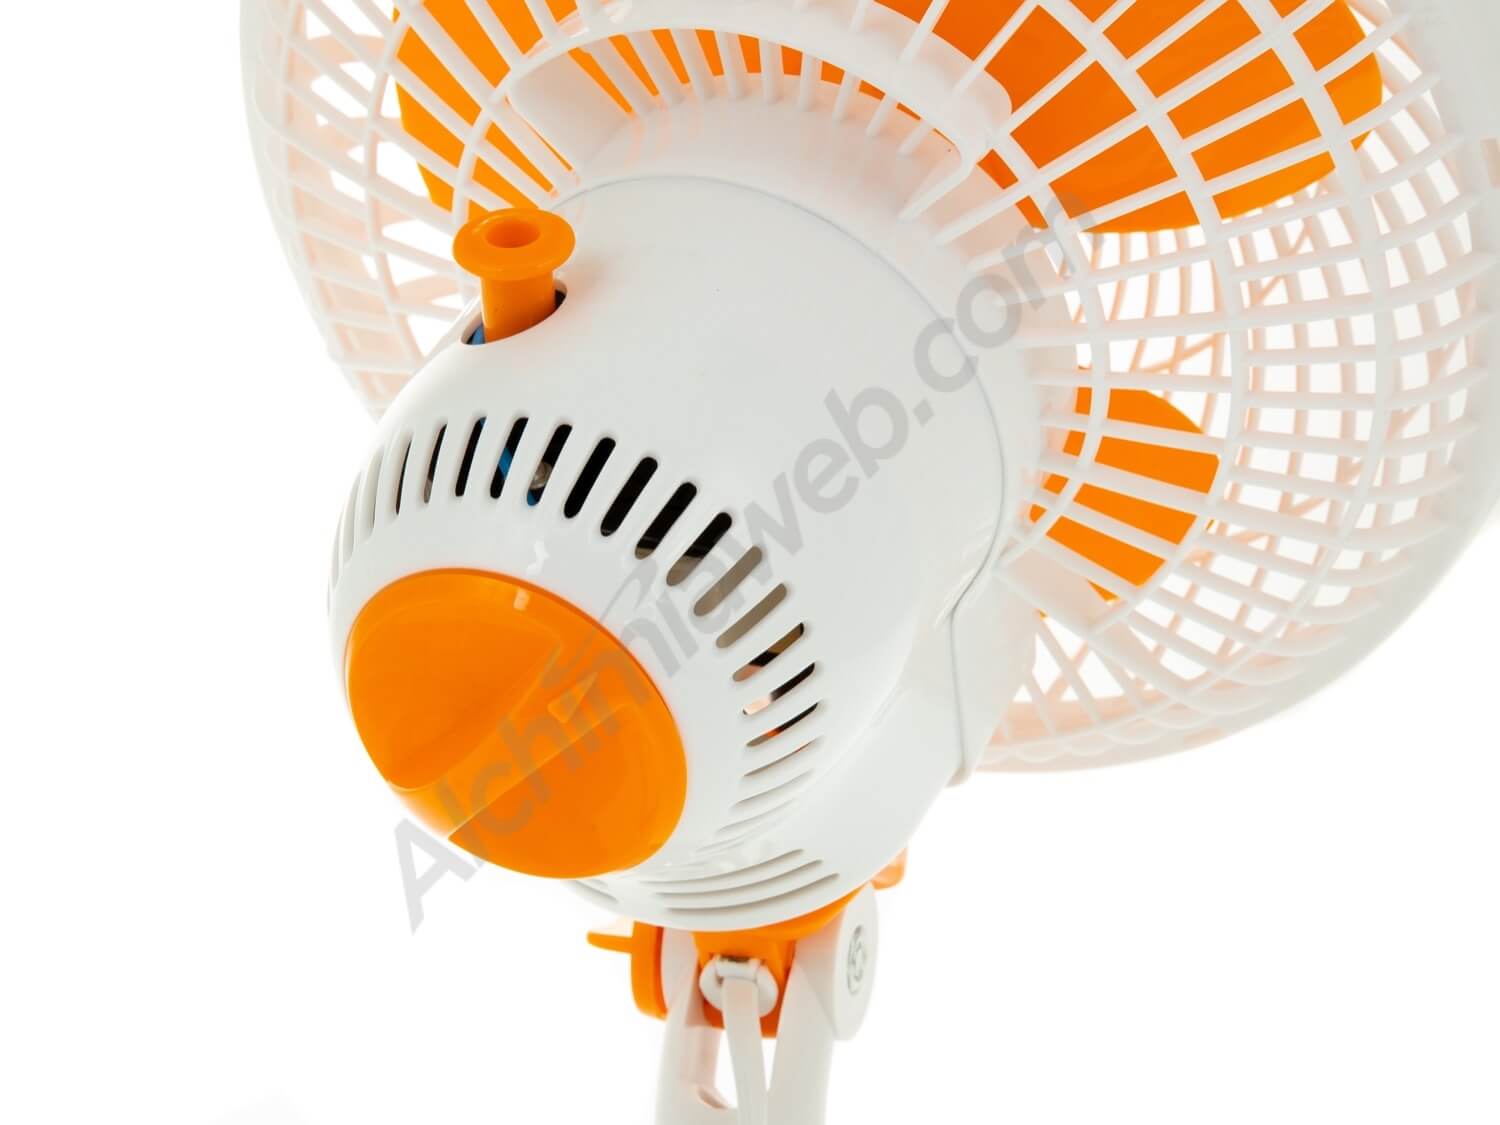 Cornwall oscillating clip fan